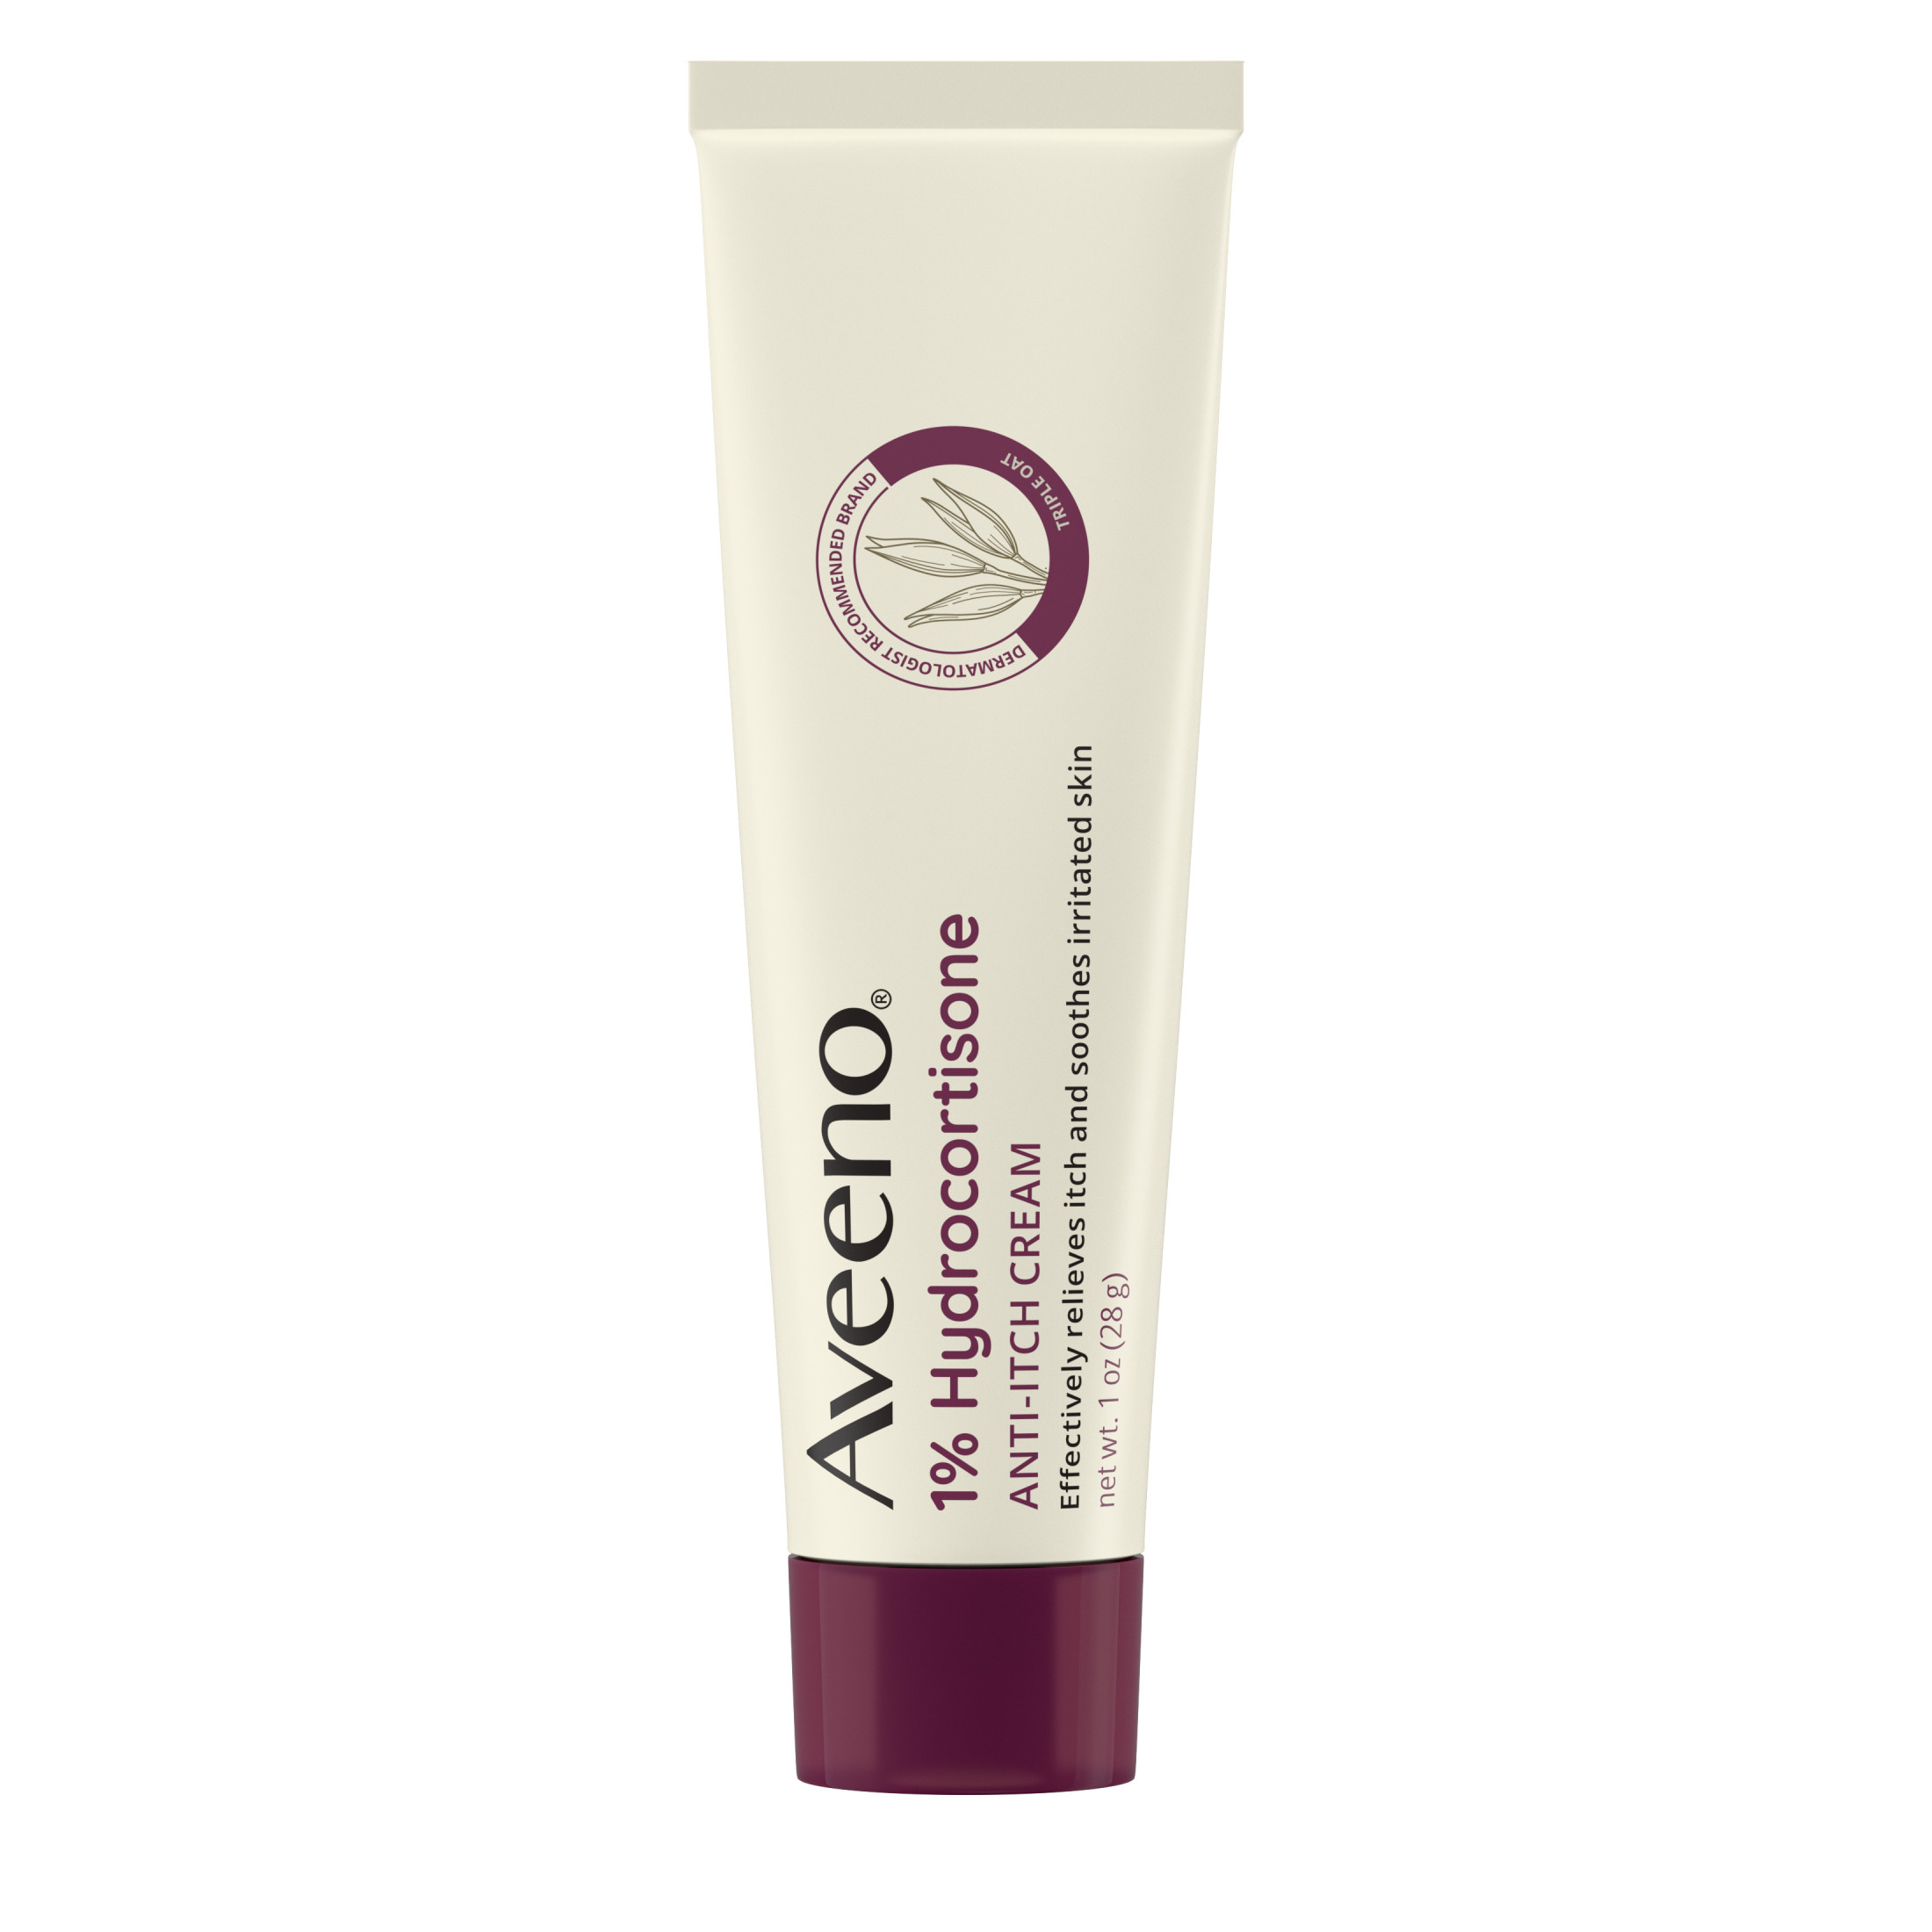 Aveeno Maximum Strength 1% Hydrocortisone Anti-Itch Cream, Triple Oat - image 1 of 10